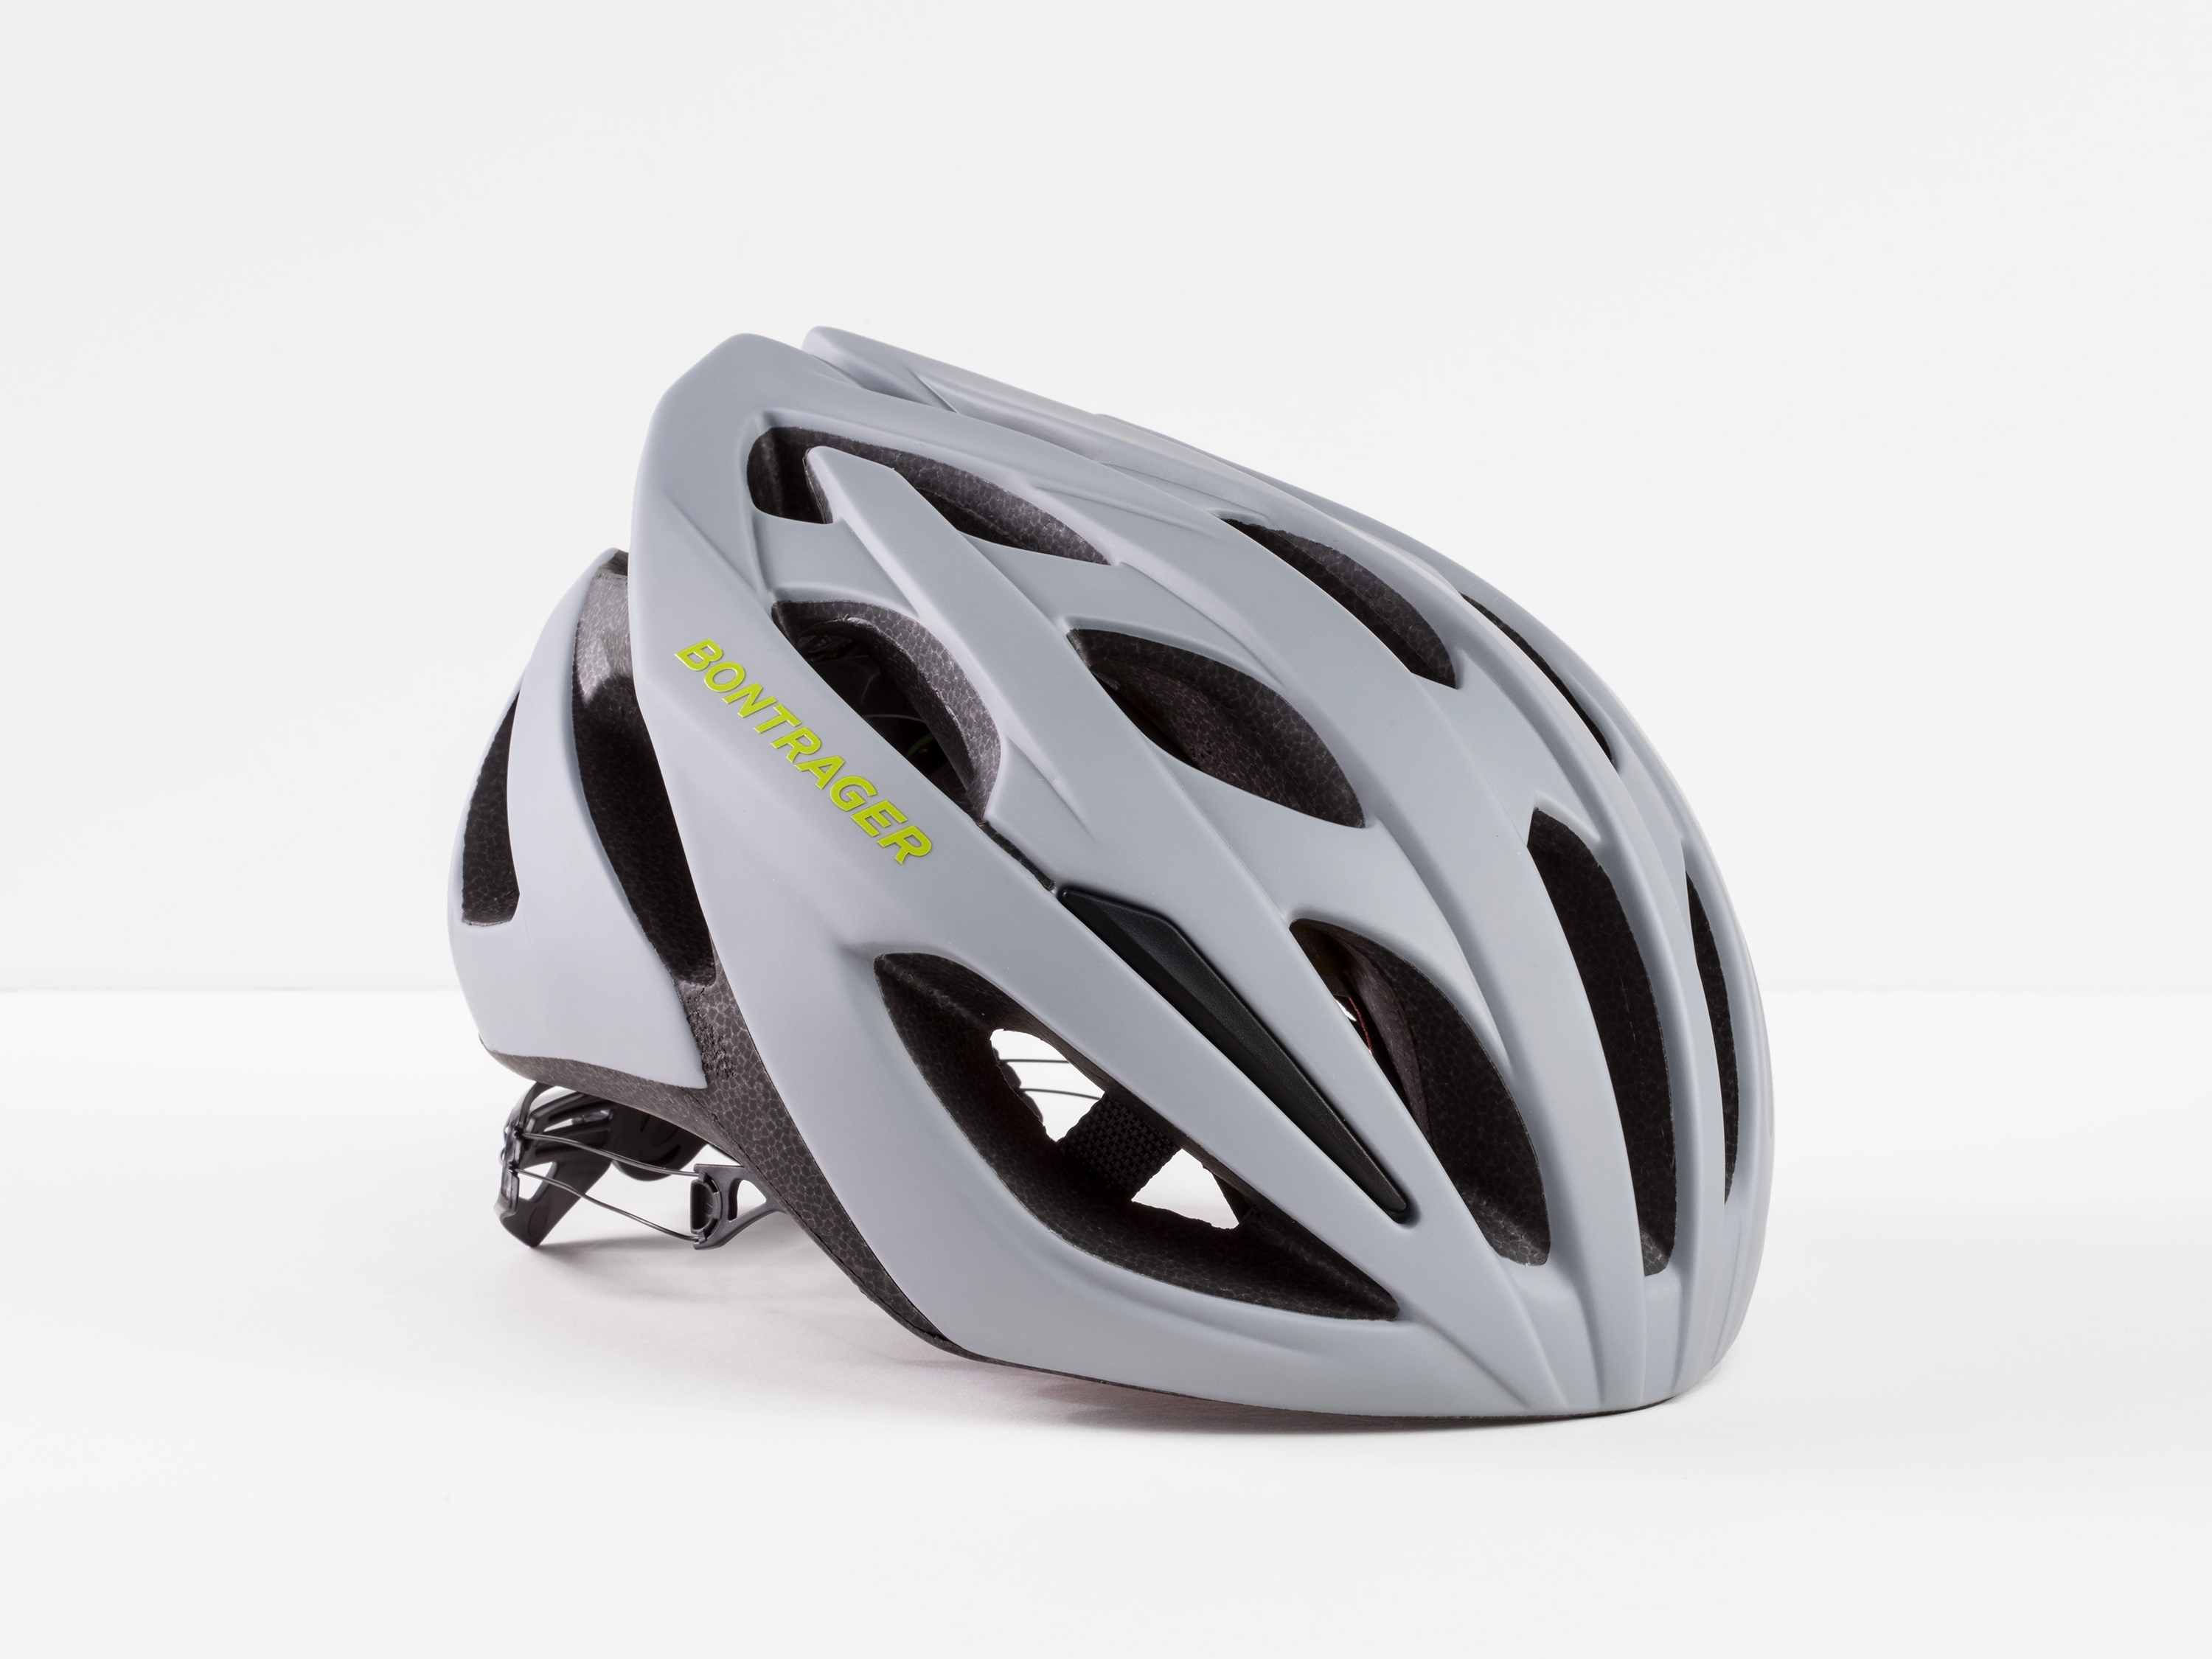 66cm bike helmet